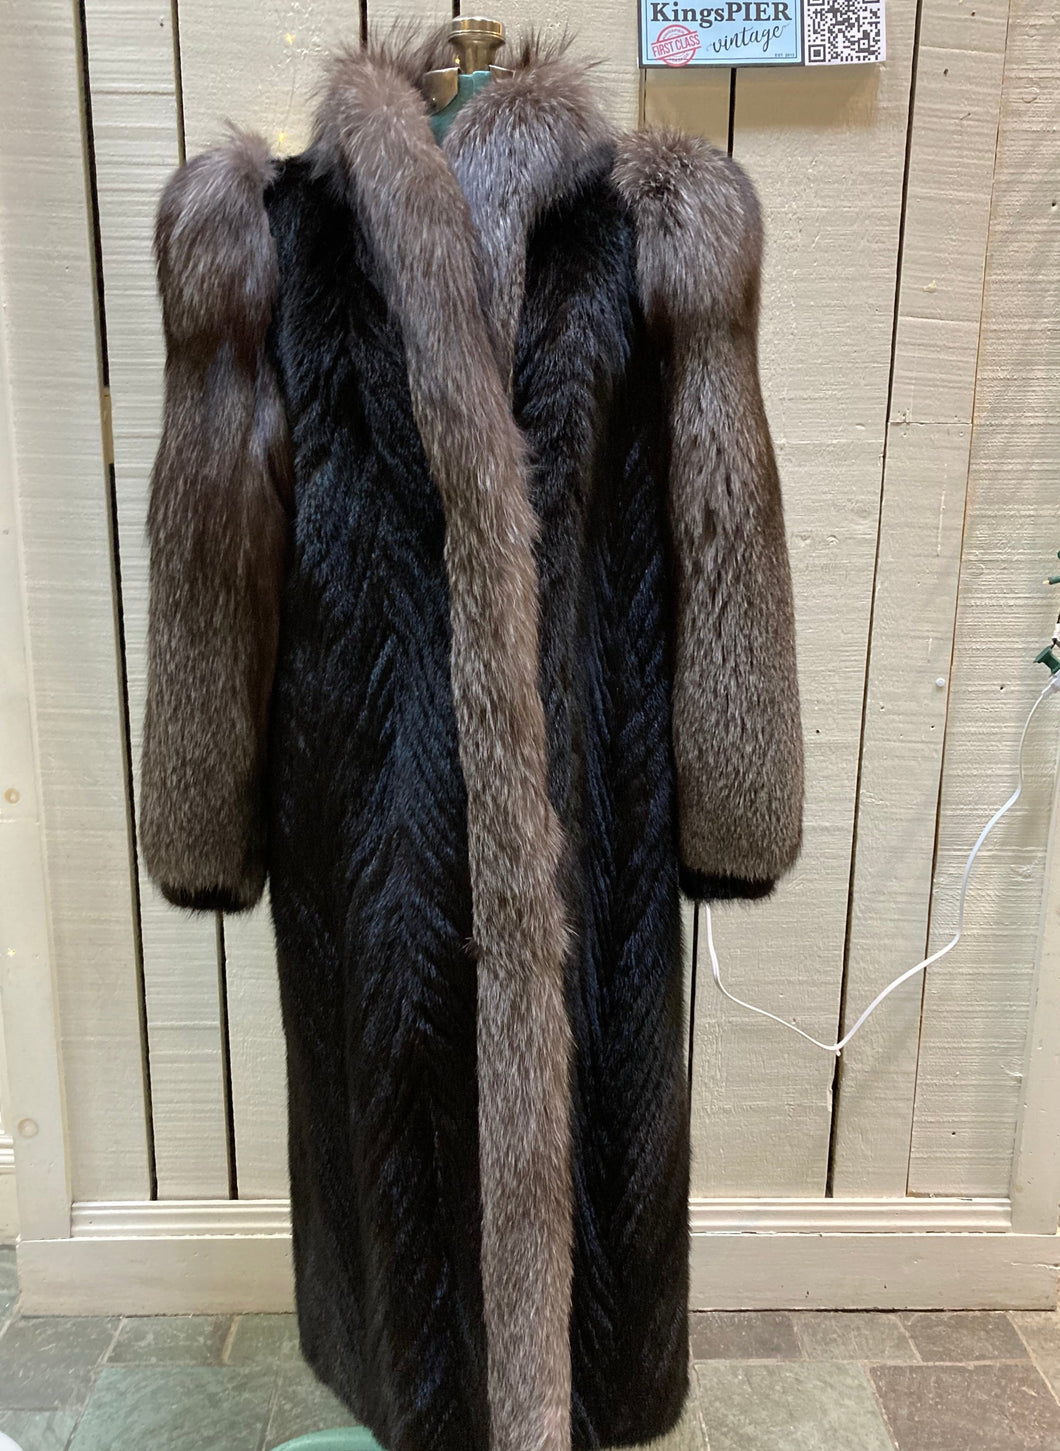 Kingspier Vintage - Vintage 1970’s Hudson’s Bay Company long fur coat with hook and eye closures.